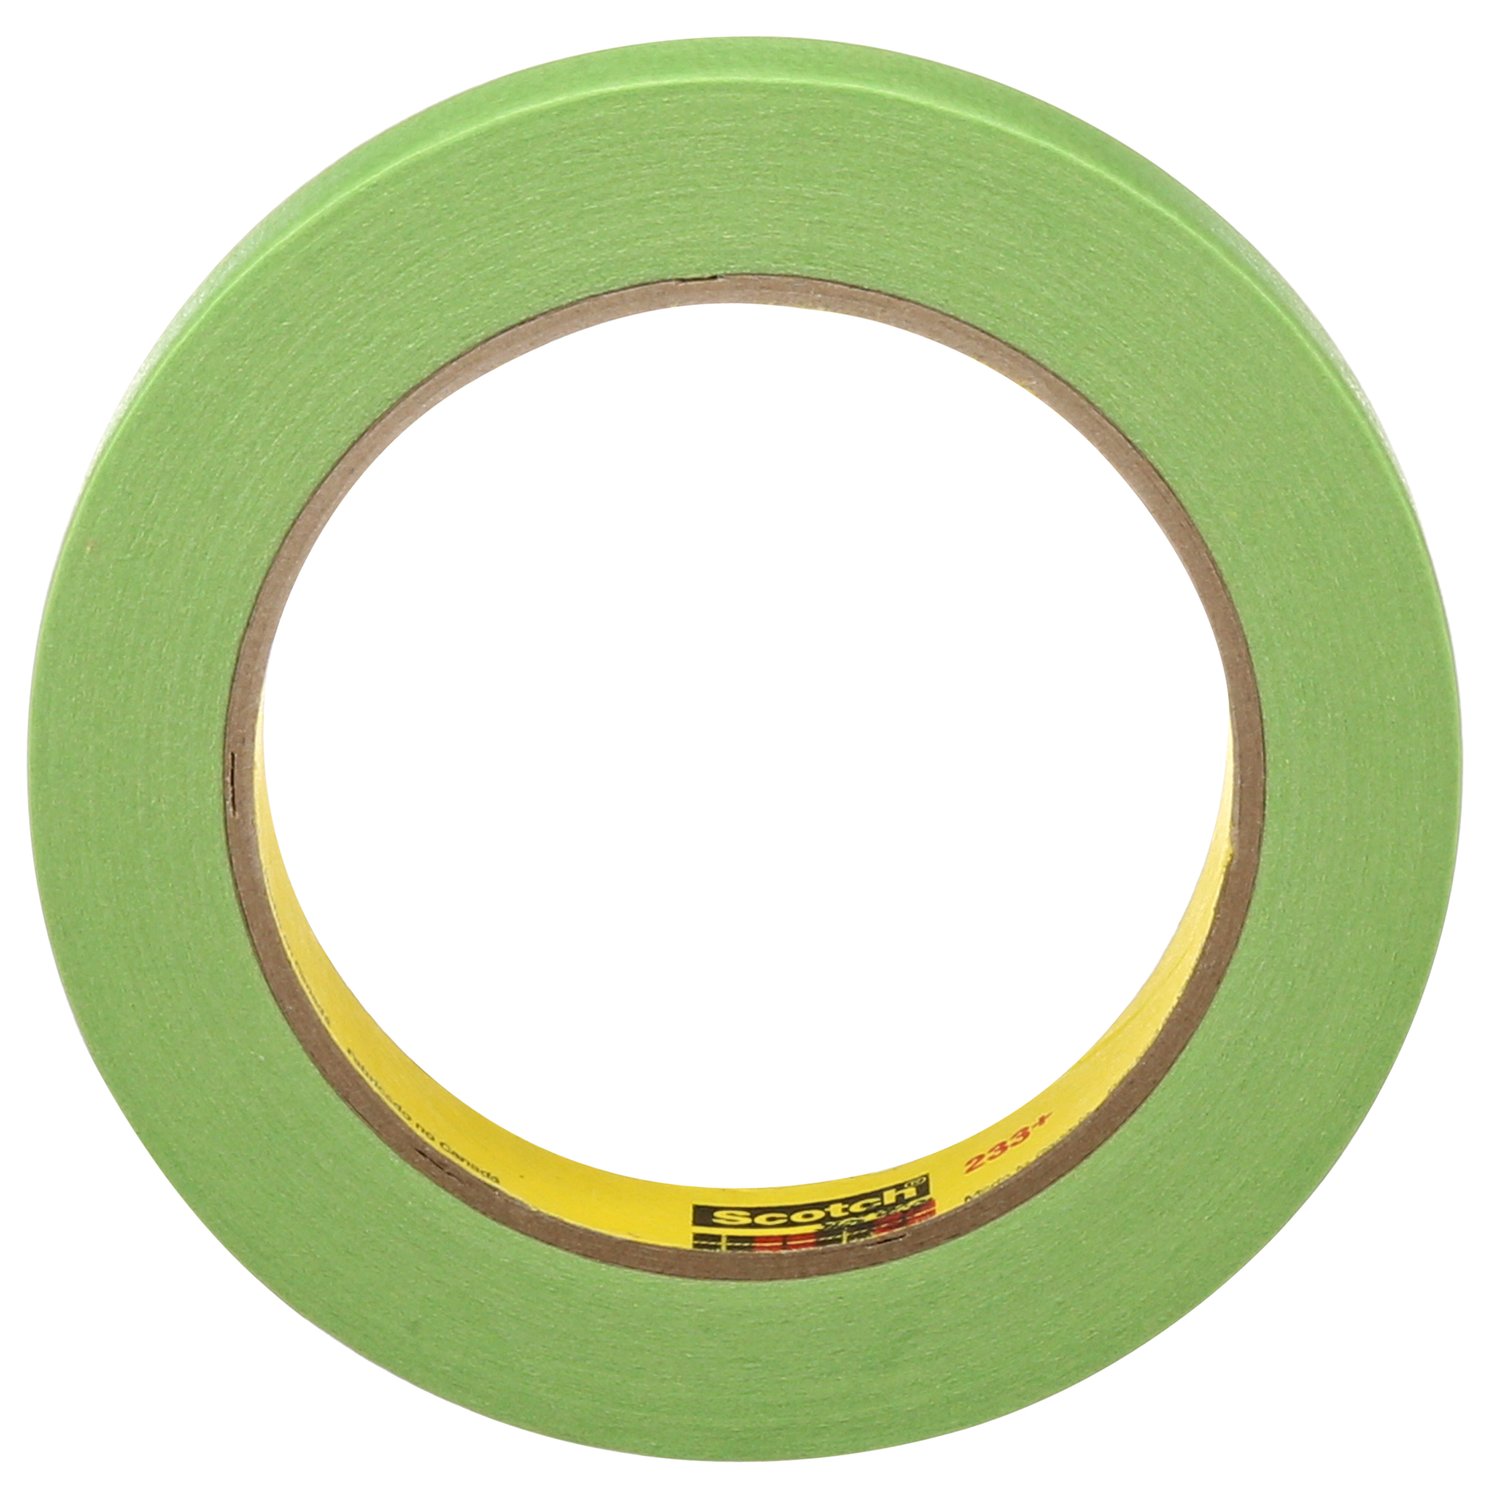 7100006159 - Scotch Performance Masking Tape 233+ 26334, Green, 18 mm x 55 m, 48/Case